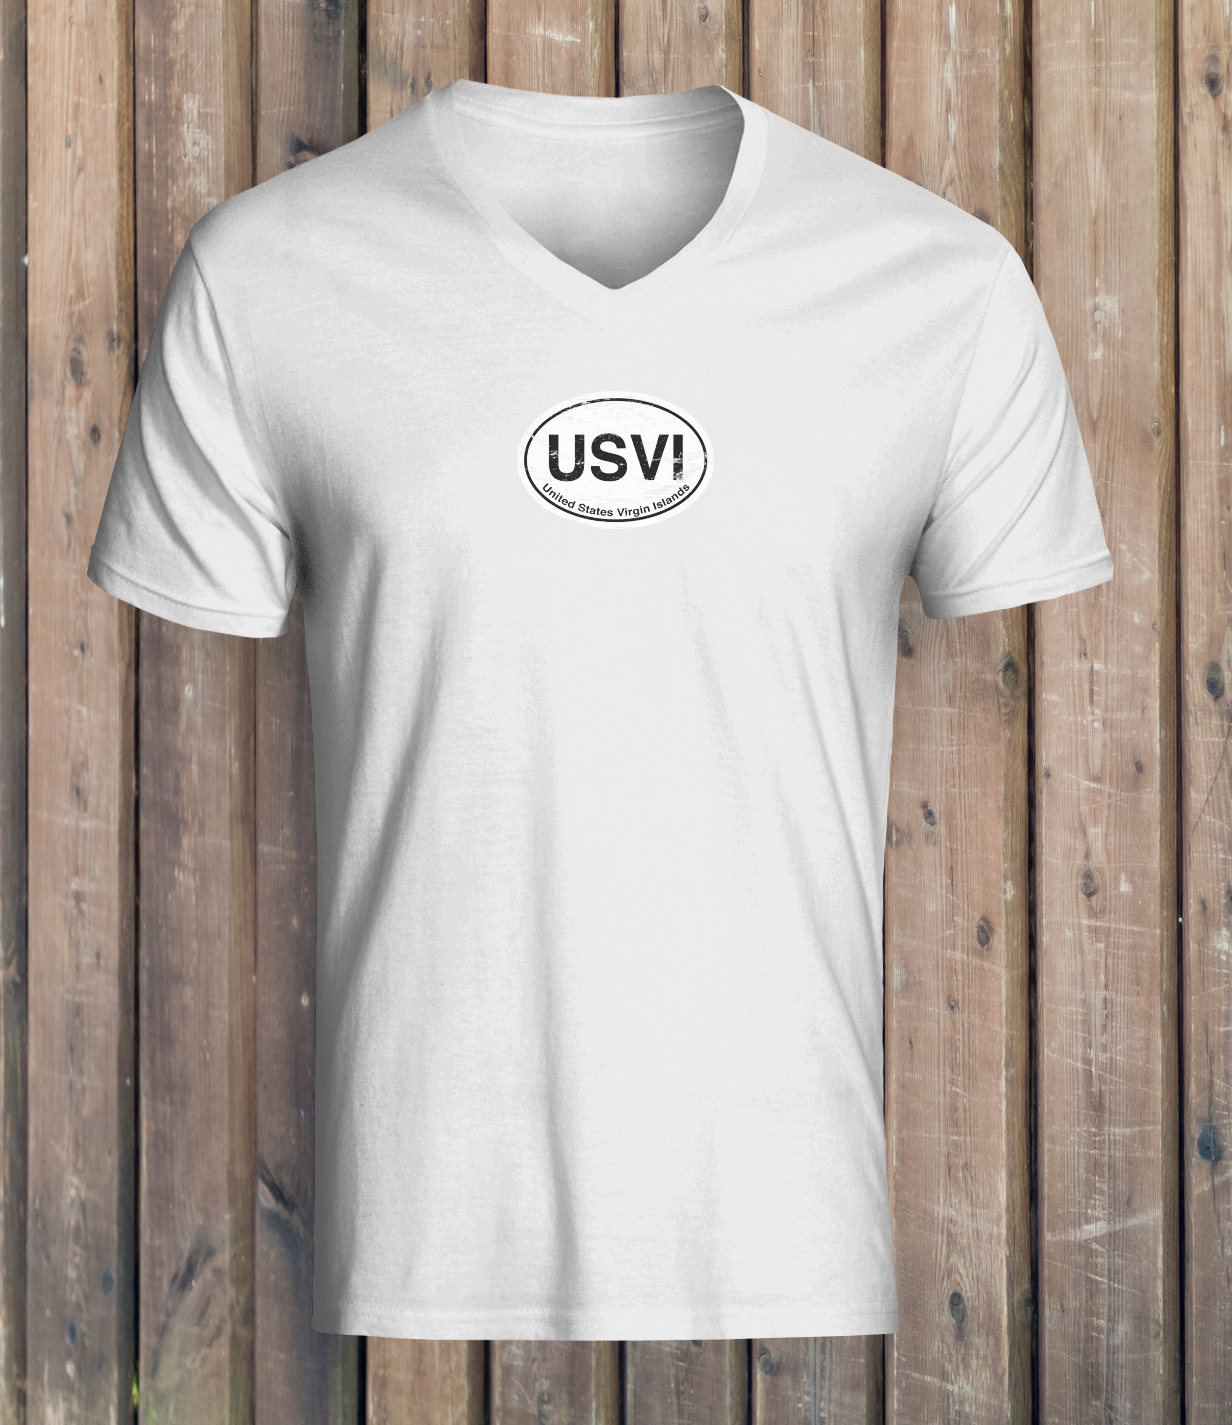 USVI Women's Classic V-Neck T-Shirts - My Destination Location